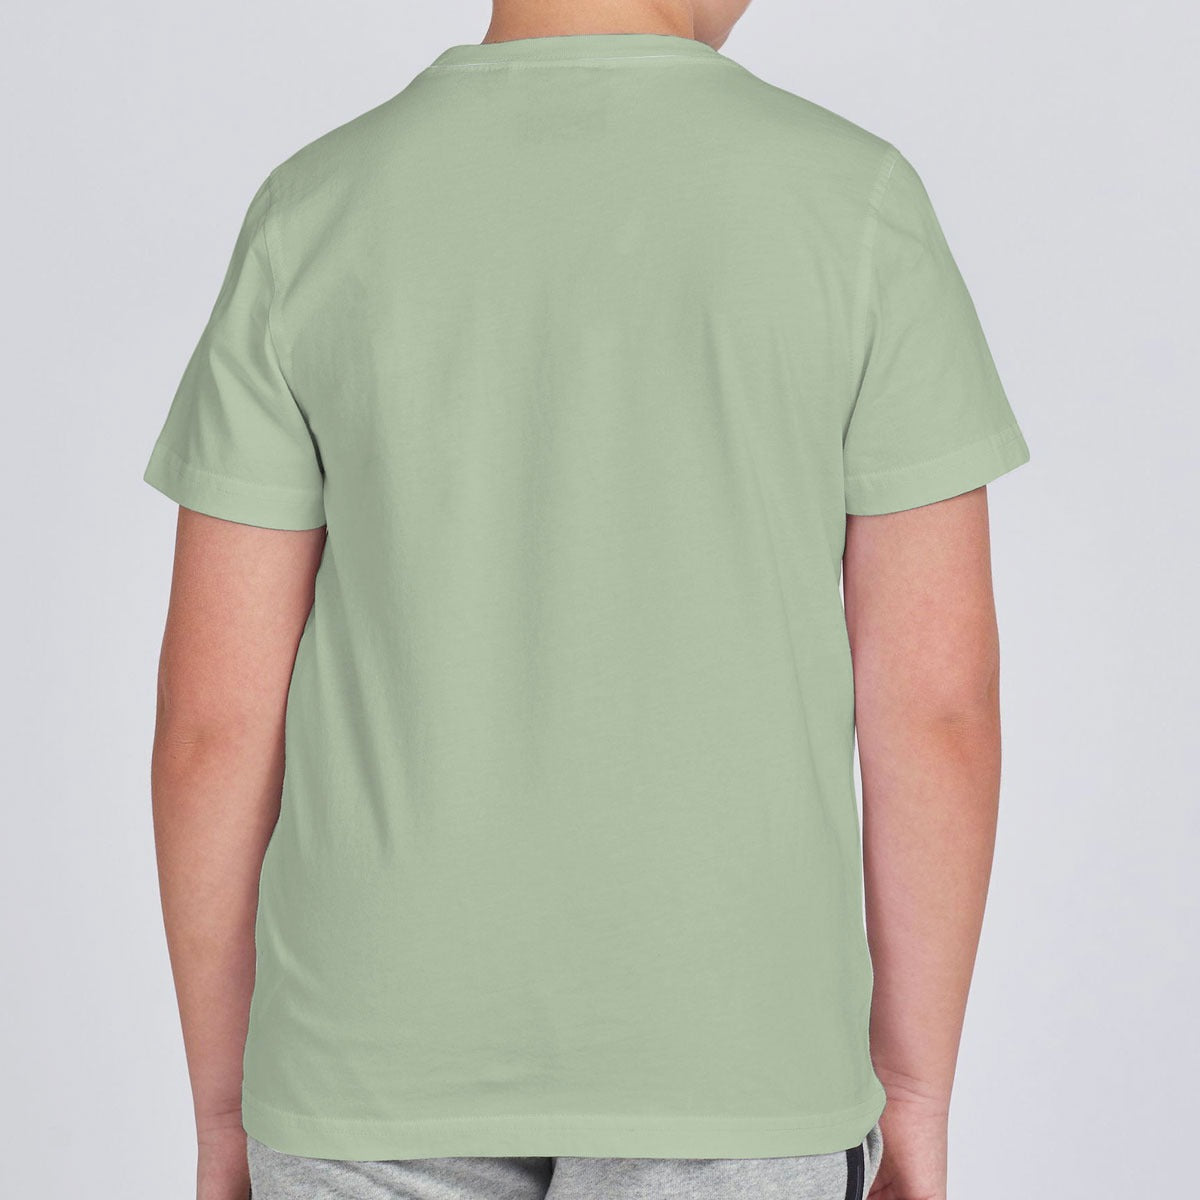 Boy's Graphic Printed Tee Shirt